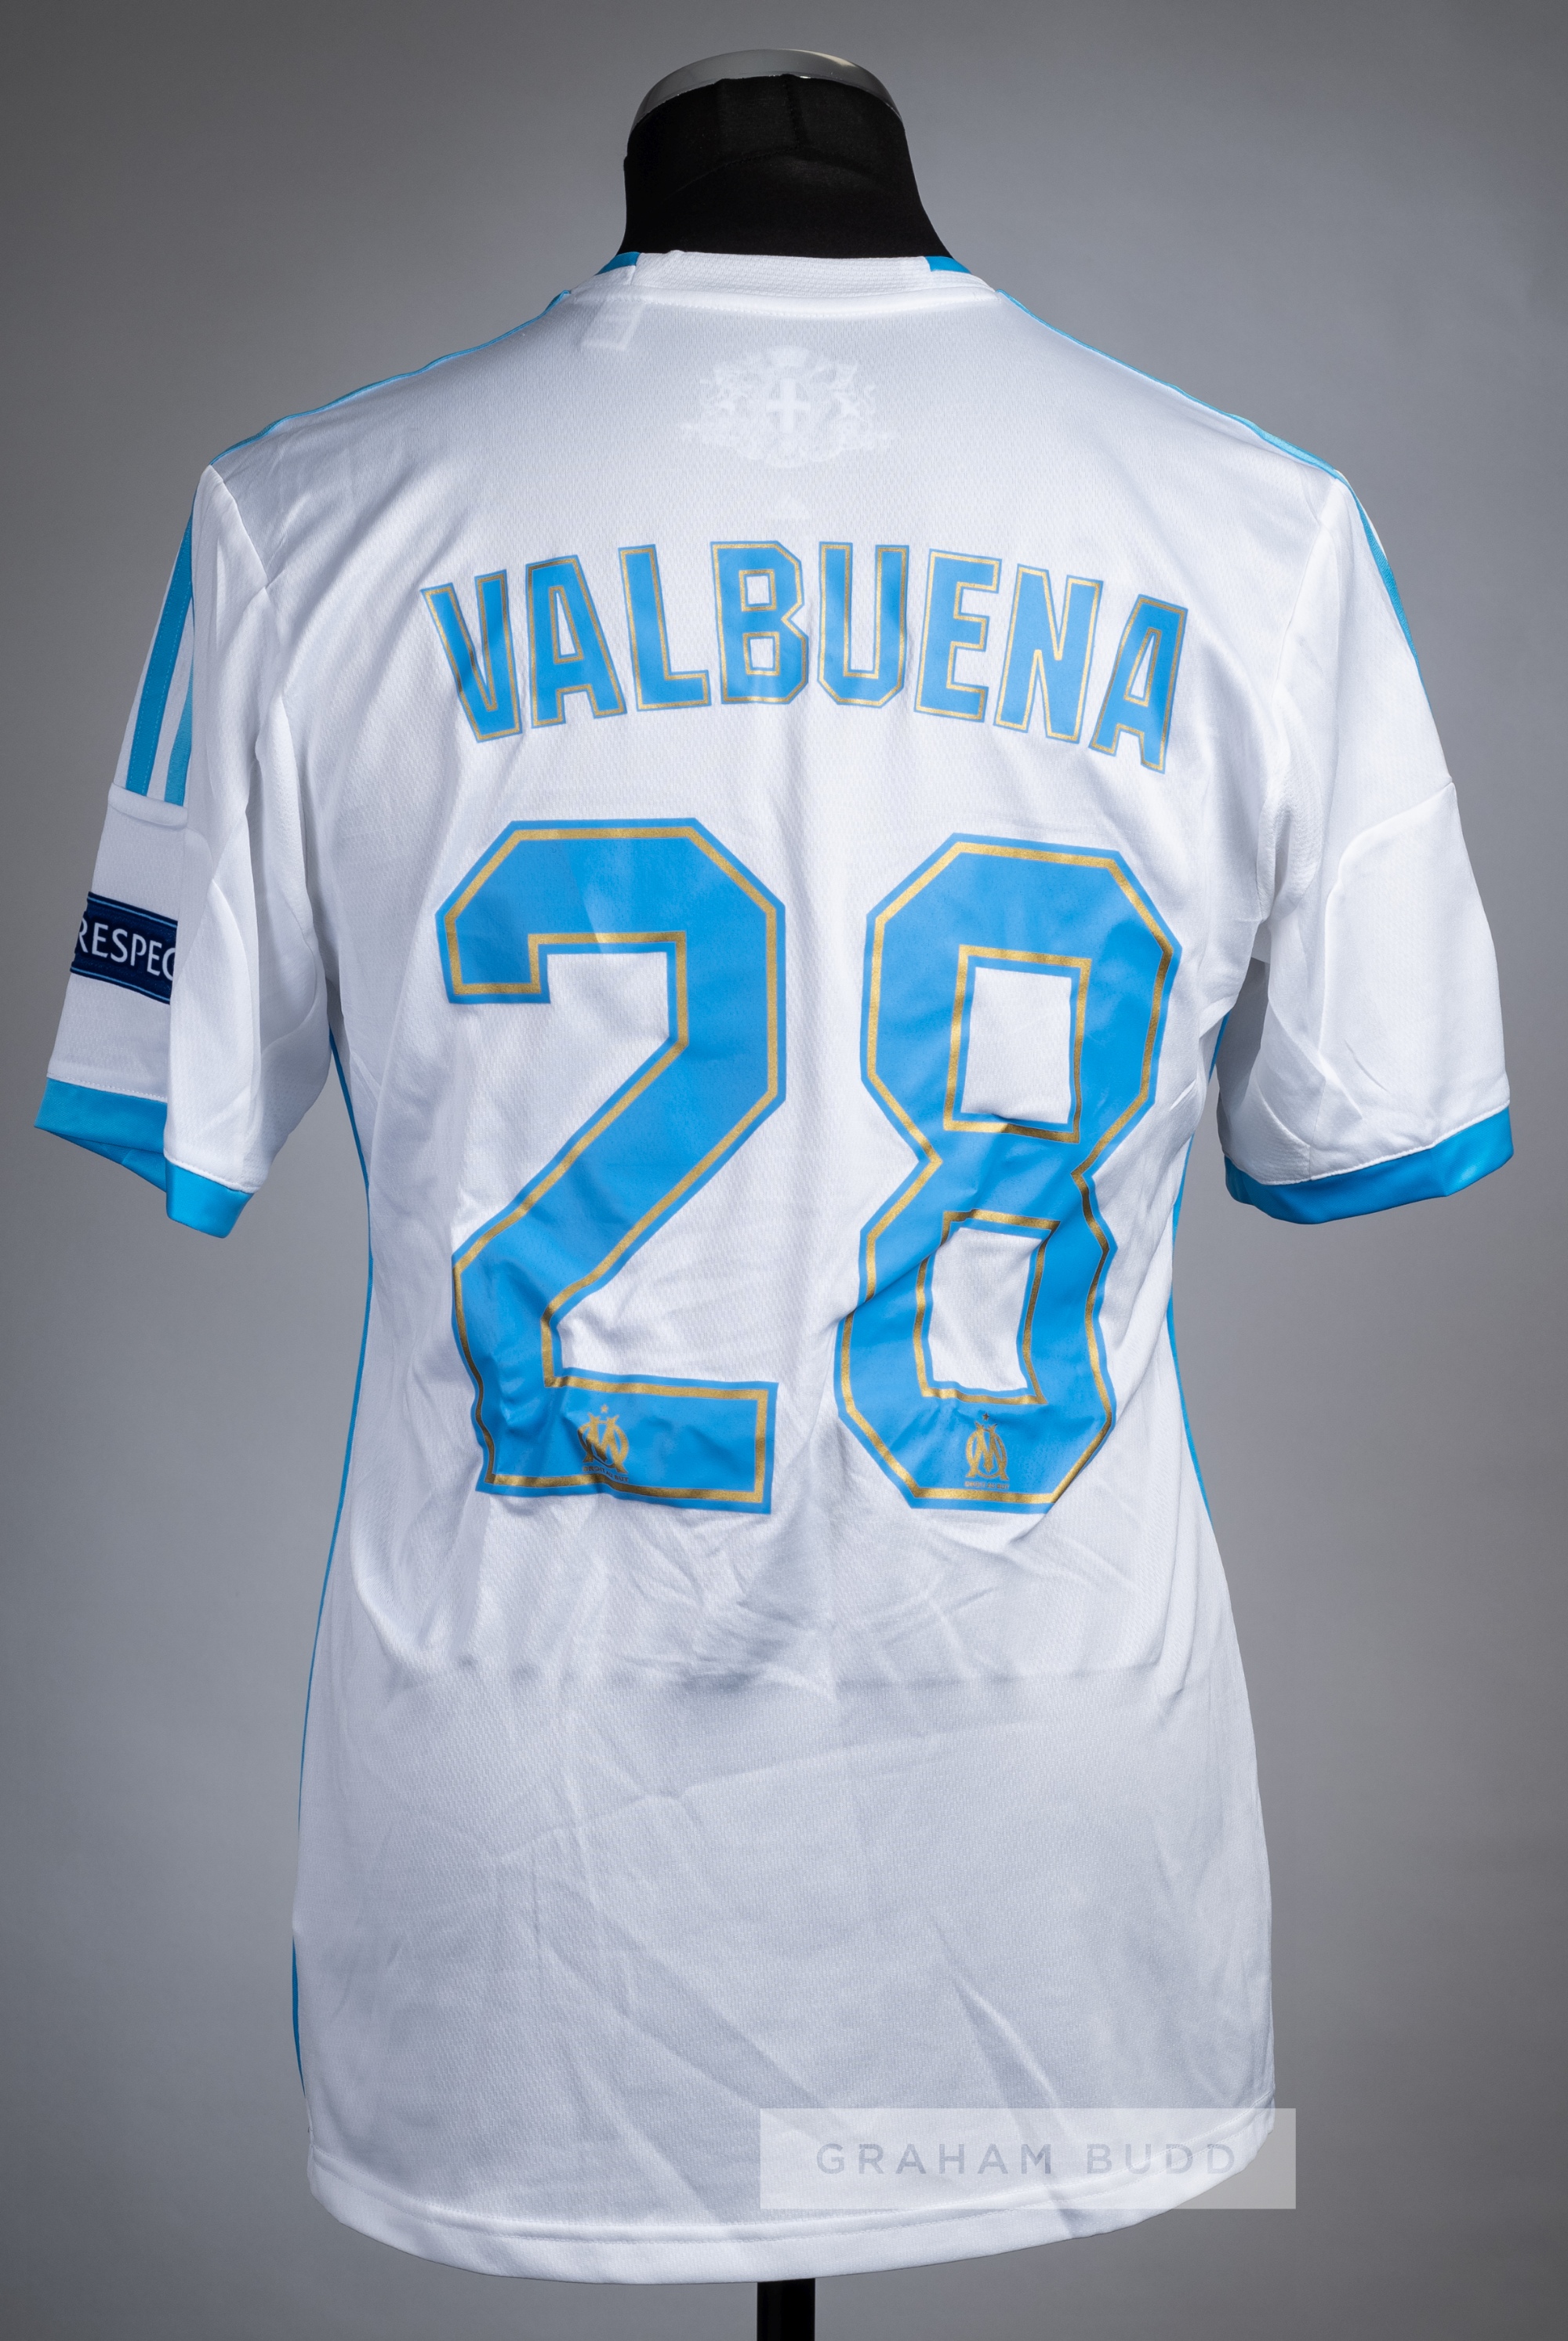 Mathieu Valbuena white Olympique de Marseille UEFA champions league no.28 jersey v Arsenal, played - Image 2 of 2